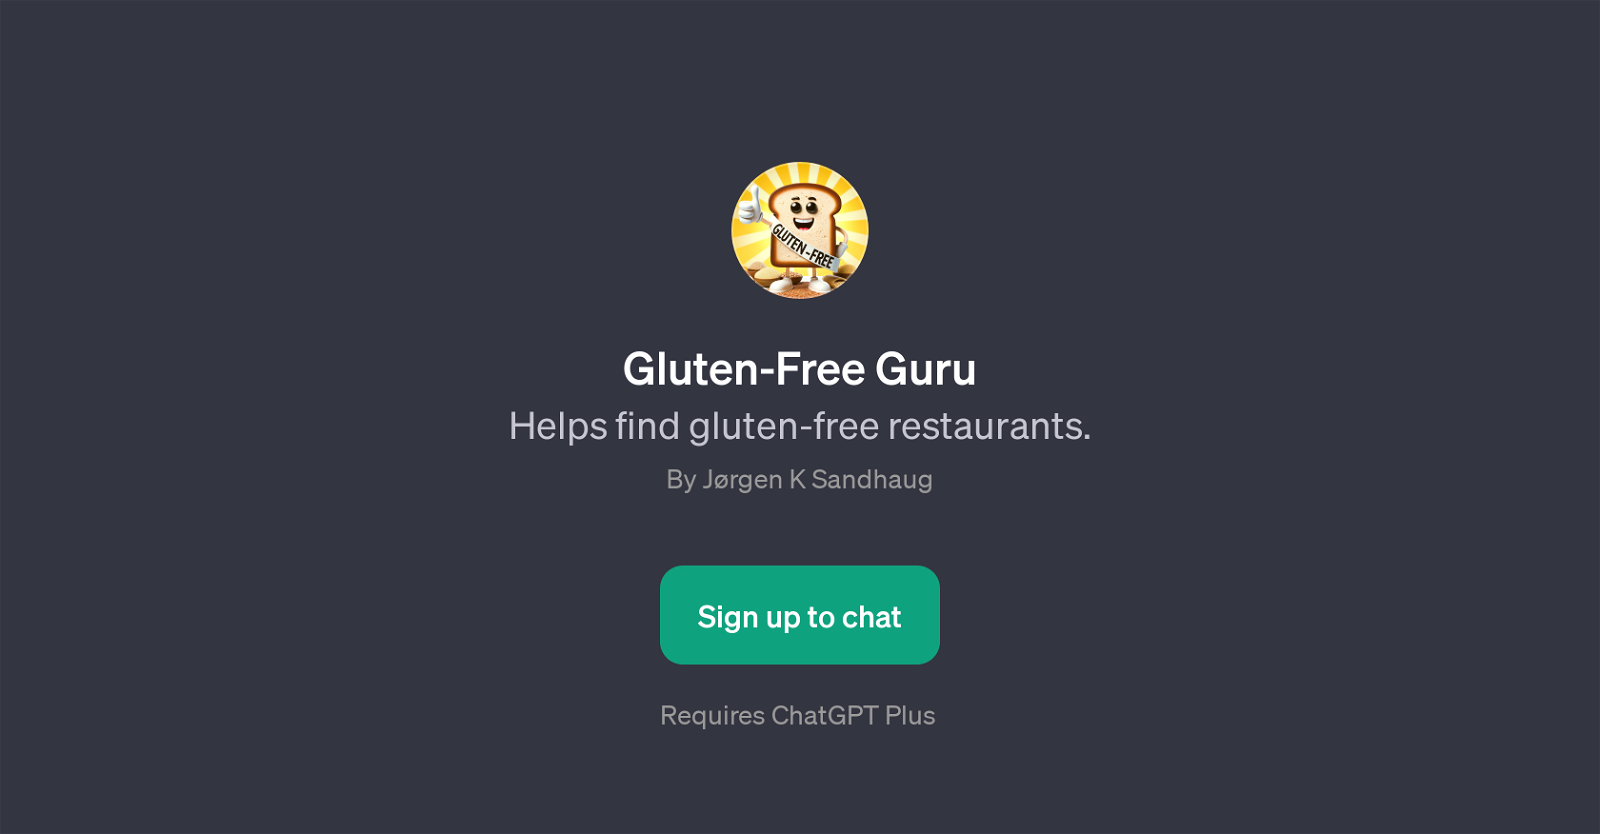 Gluten-Free Guru website